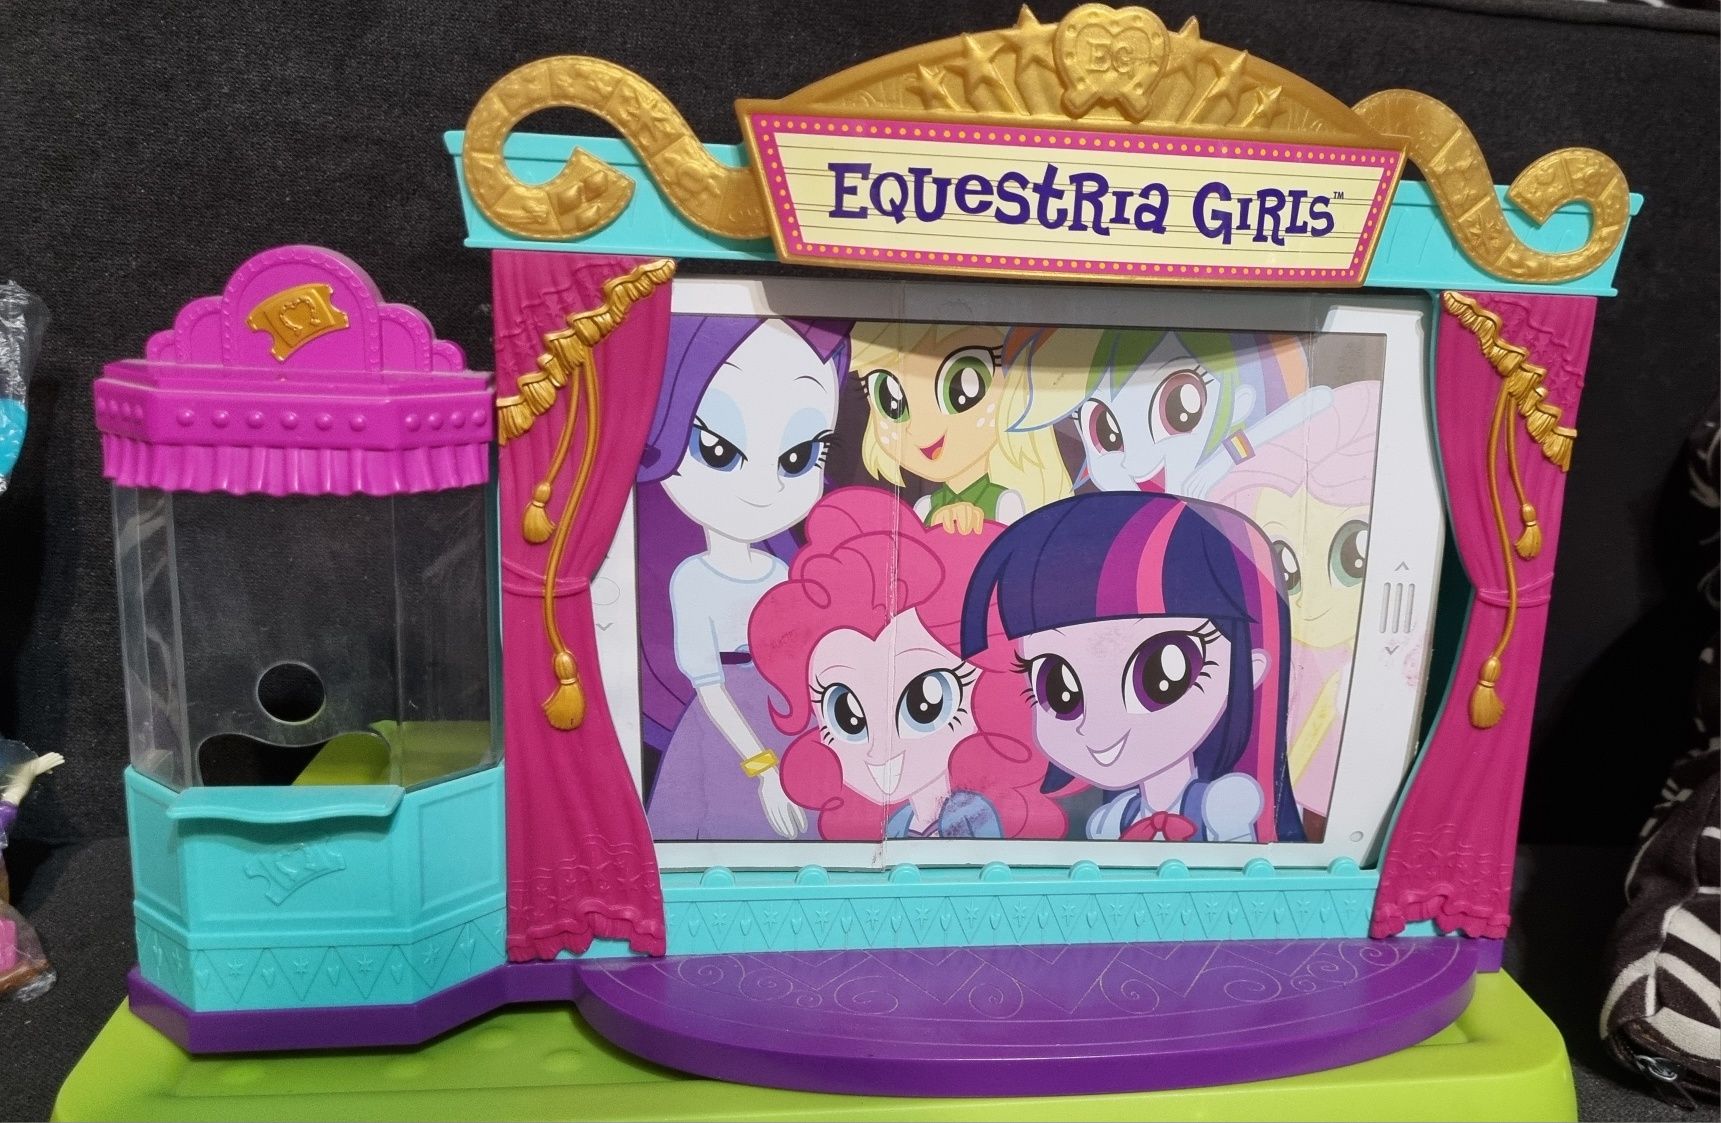 Cena ostateczna  Equestria girls kino